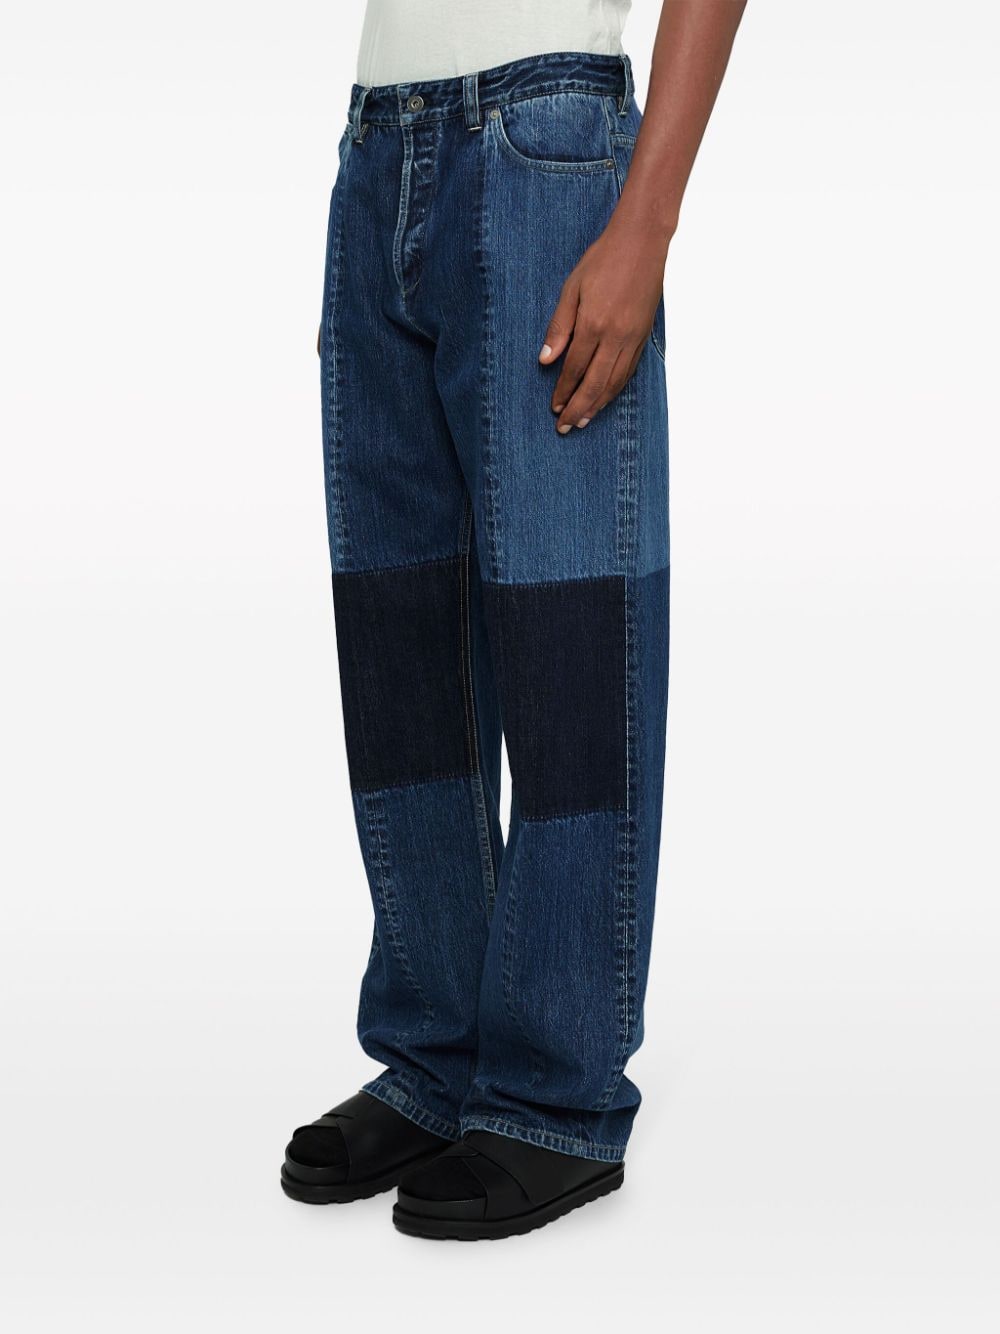 Patchwork design jeans